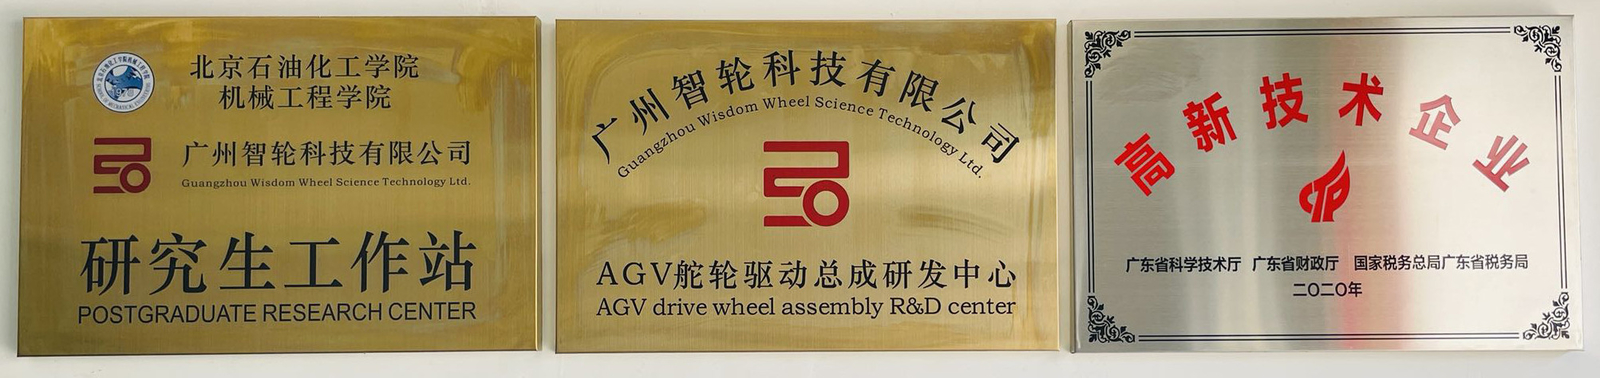 Guangzhou Wisdom Wheel Science Technology Ltd. สายการผลิตของโรงงาน